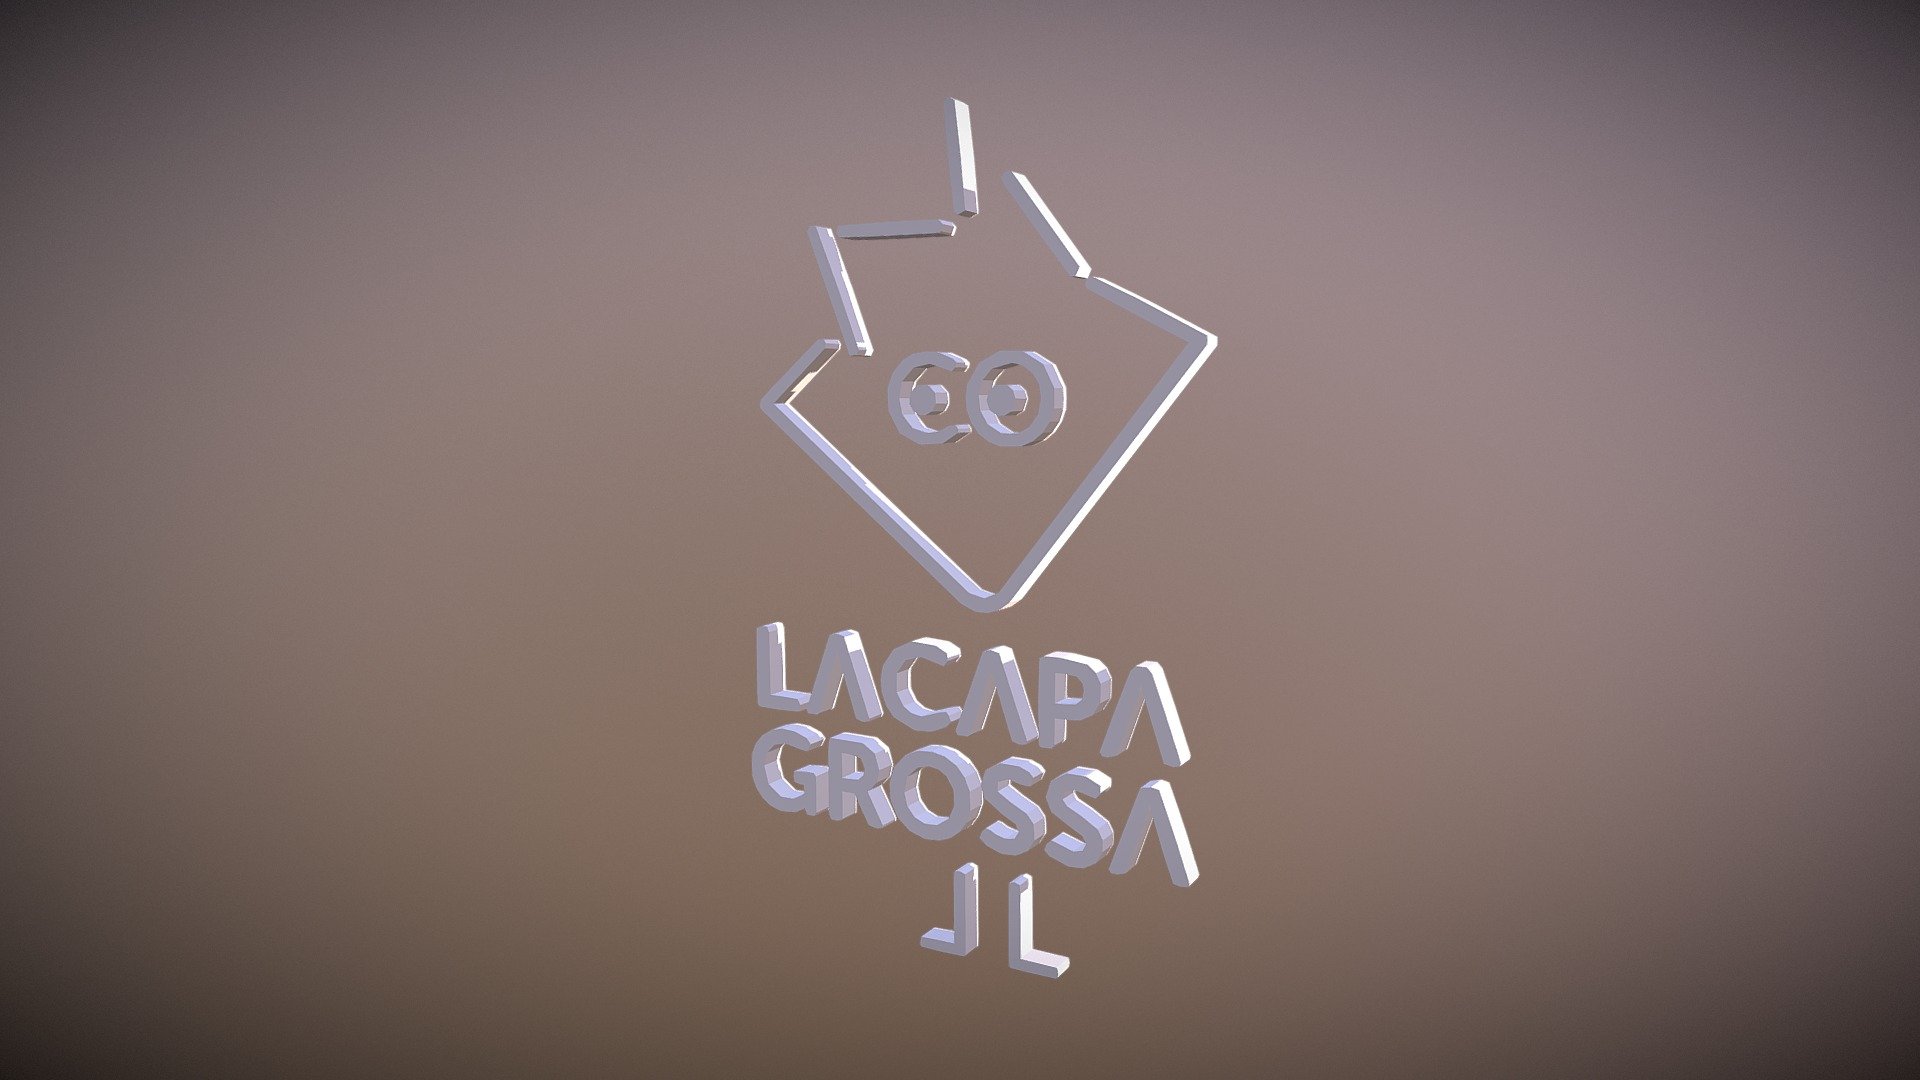 Logo La Capagrossa